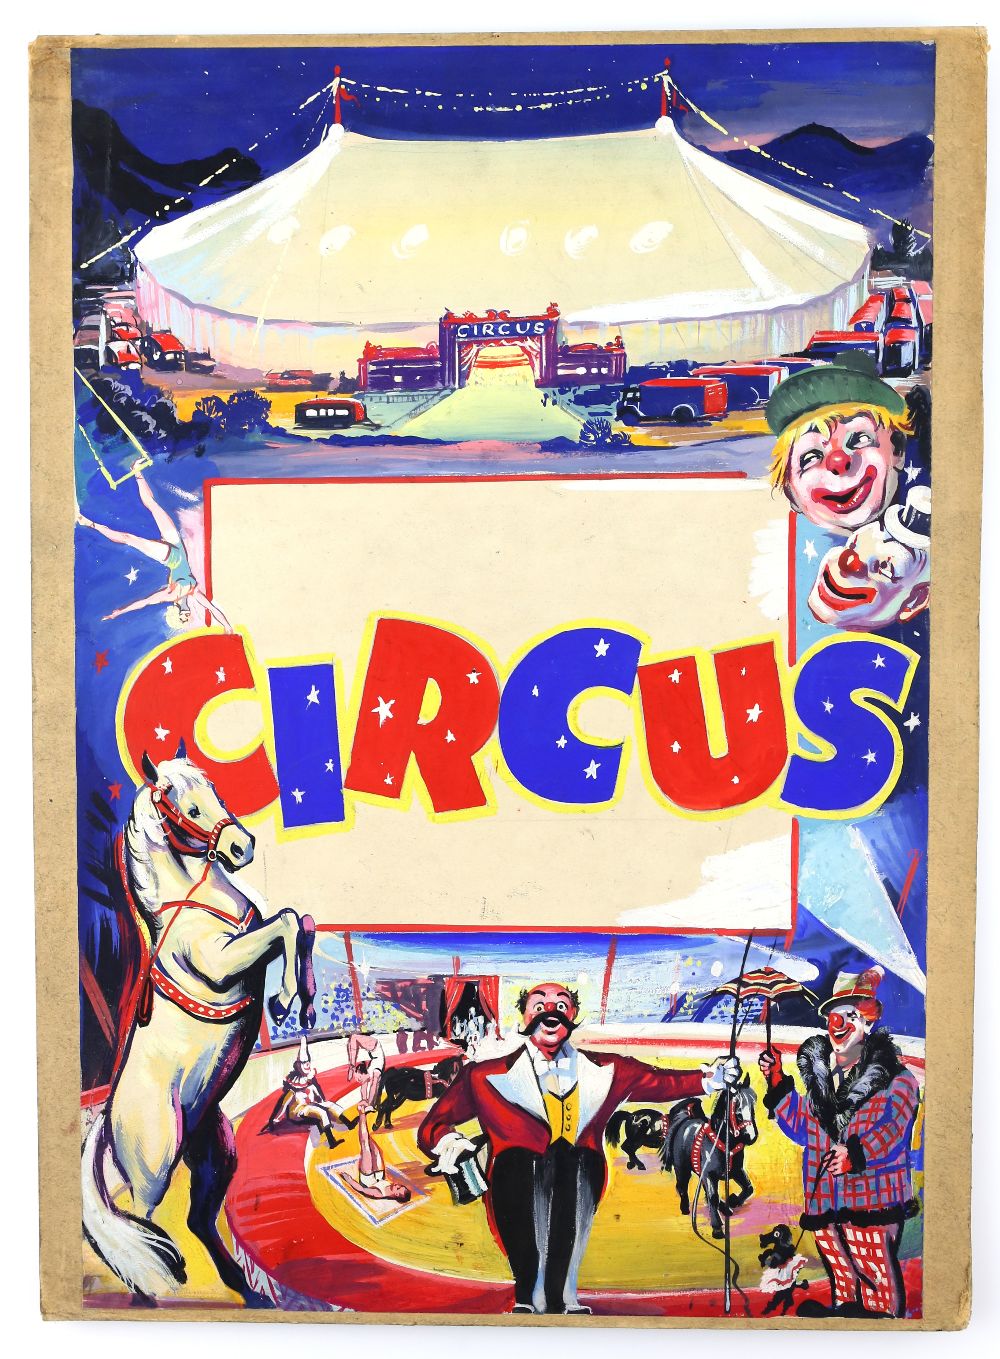 Circus Artwork - Big top, ring master, clowns and horses, original hand painted poster artwork, on